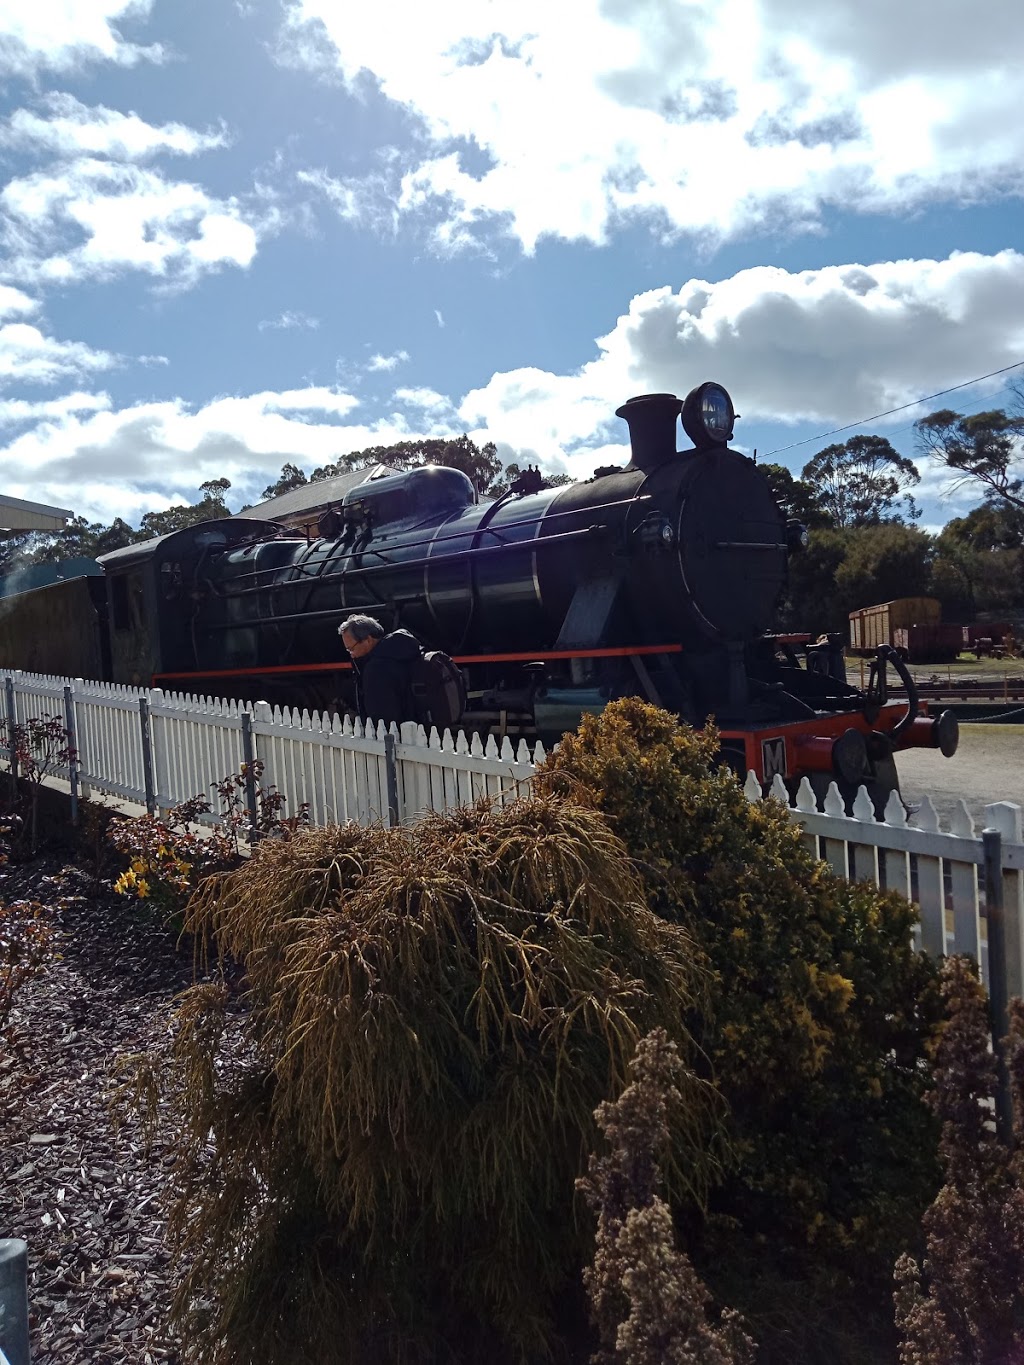 Don River Railroad | museum | Don TAS 7310, Australia